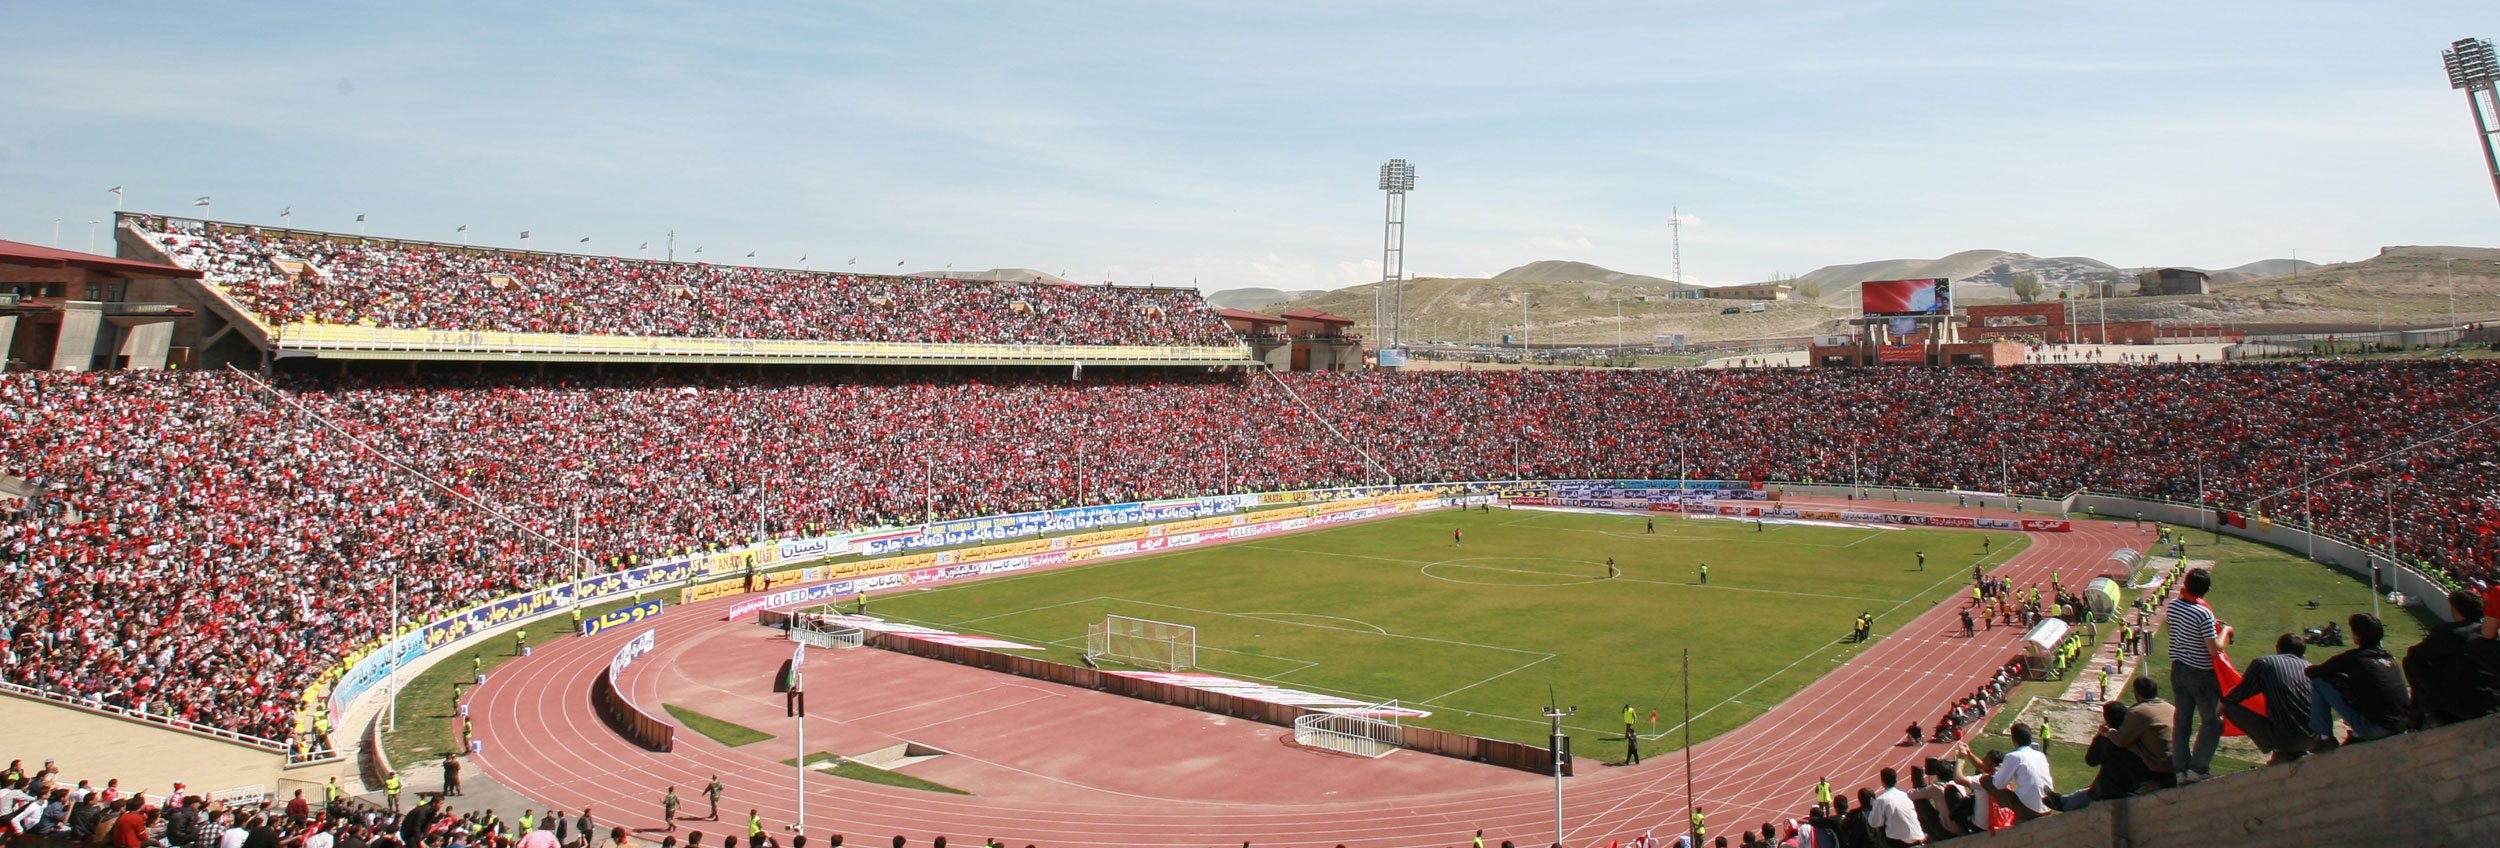 Yadegar-e-Imam Stadium, Tabriz, Iran